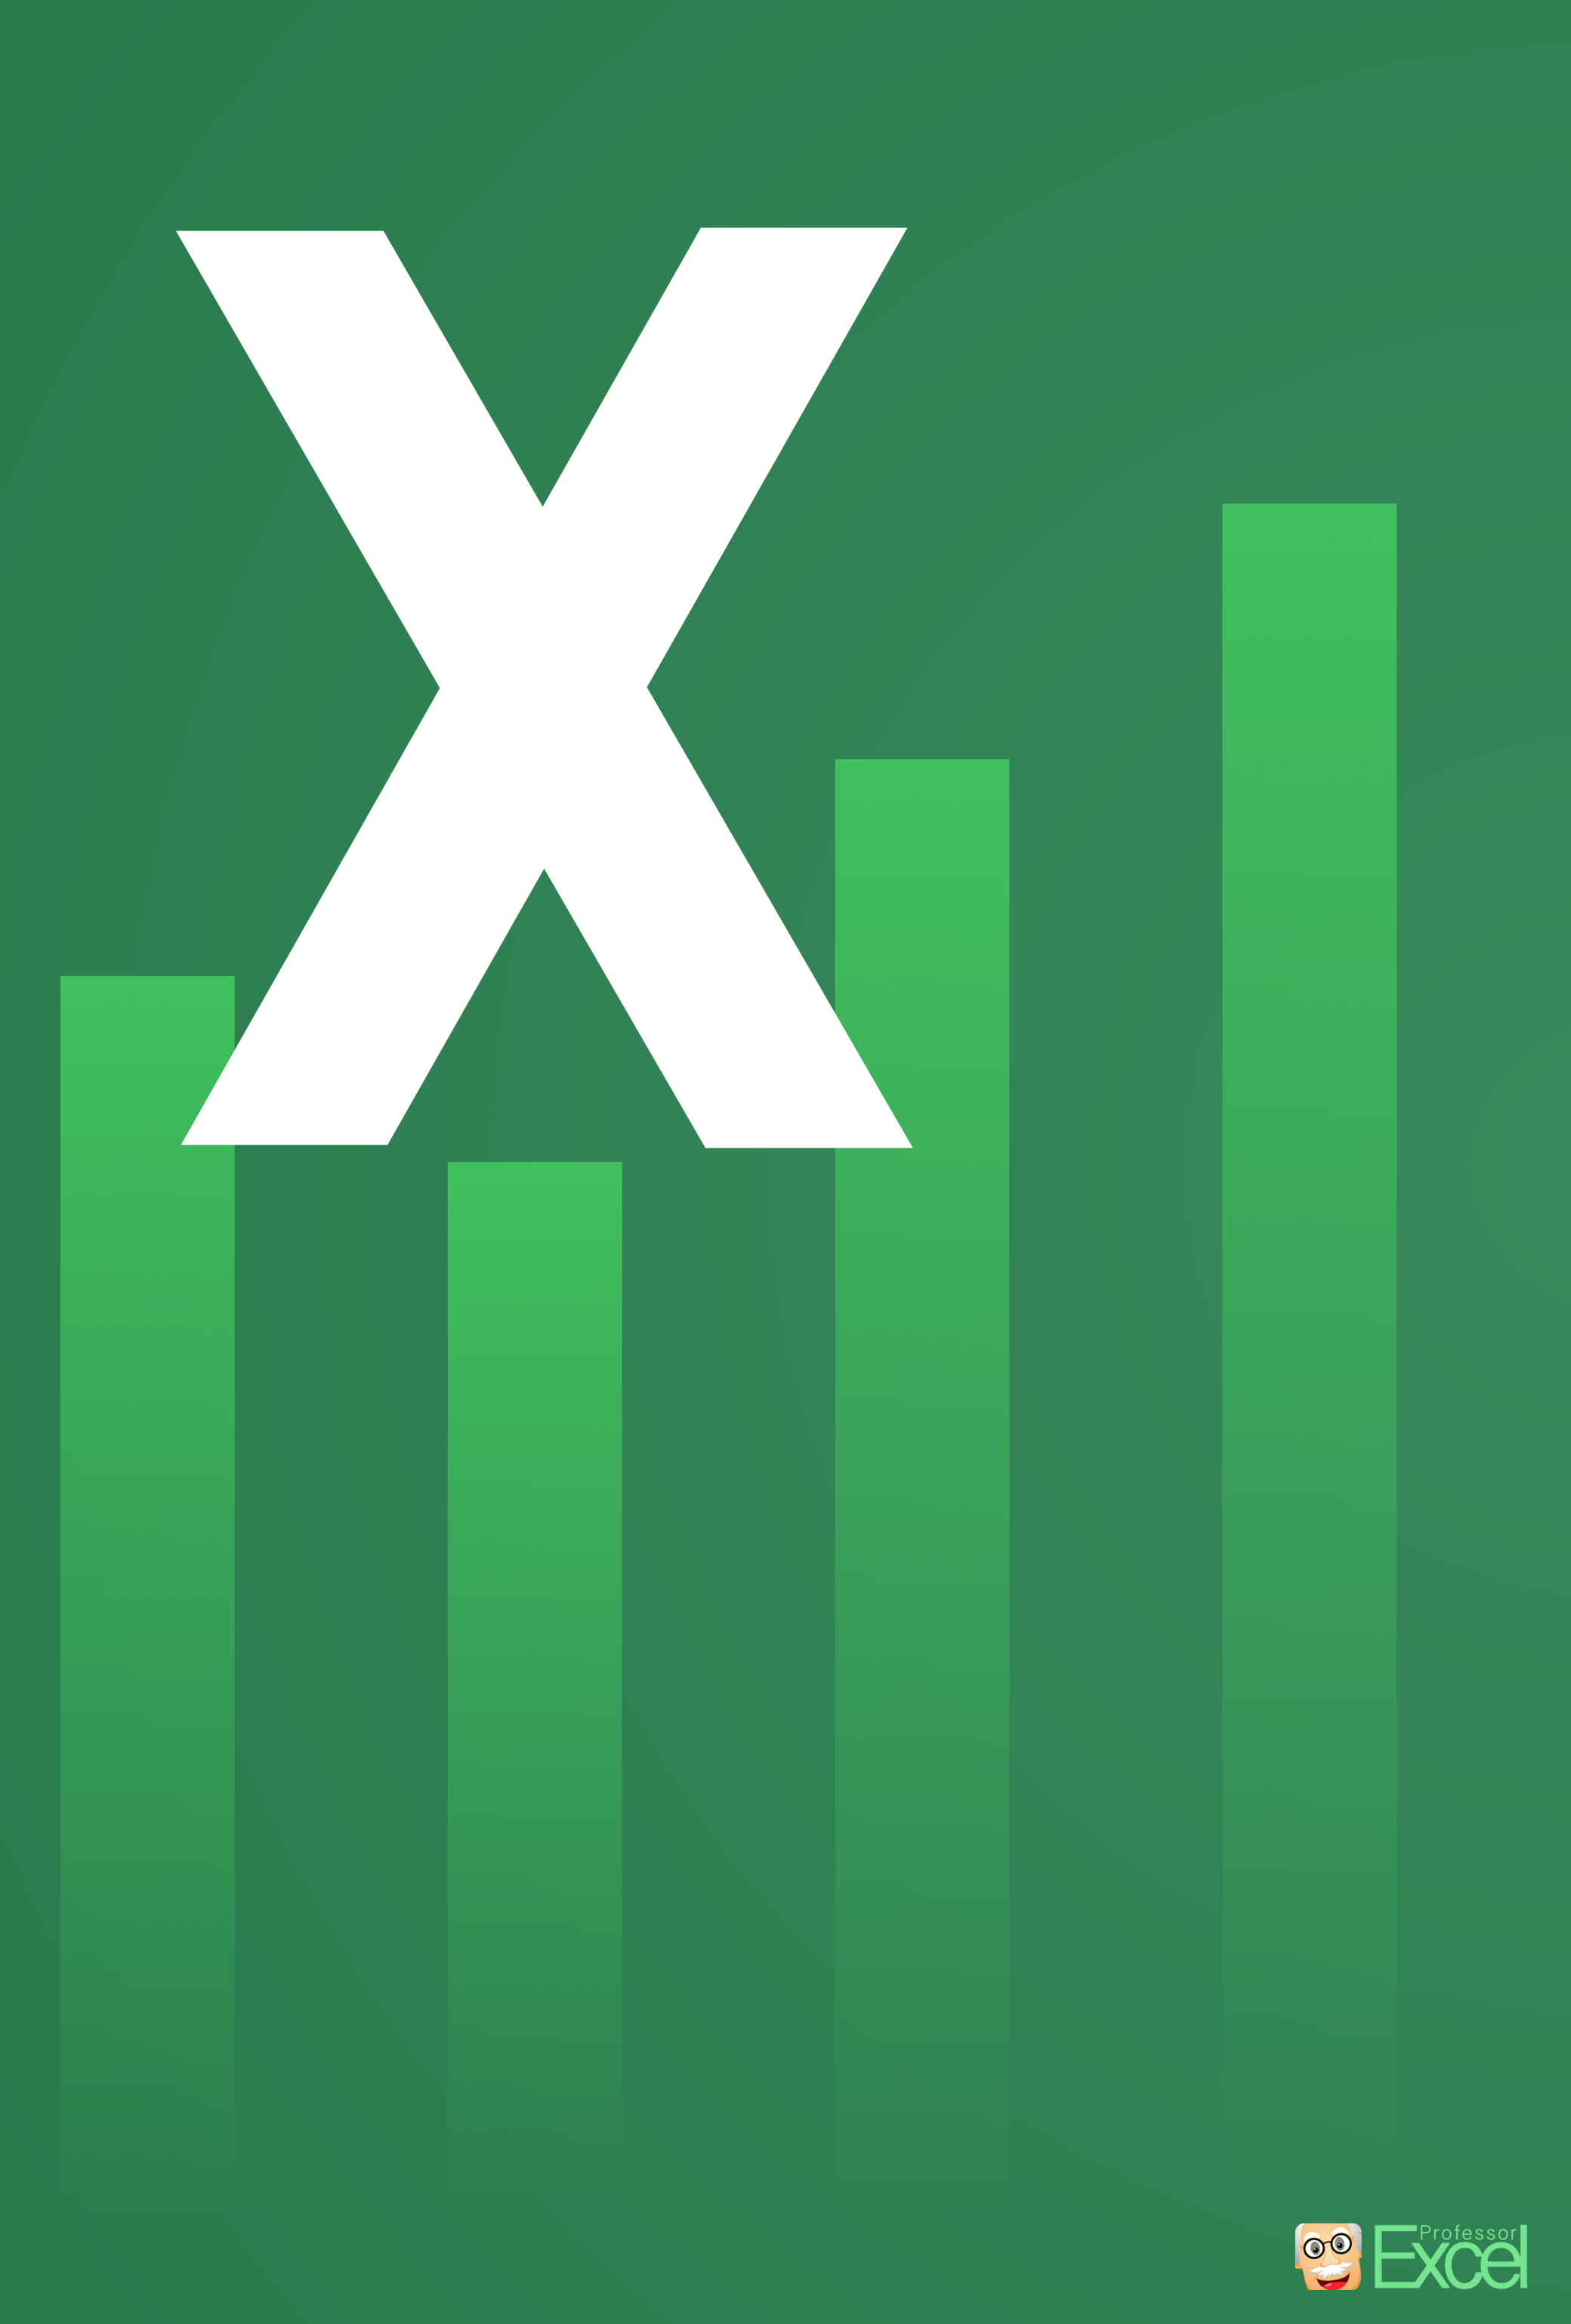 Excel Wallpaper for Free Download | Professor Excel